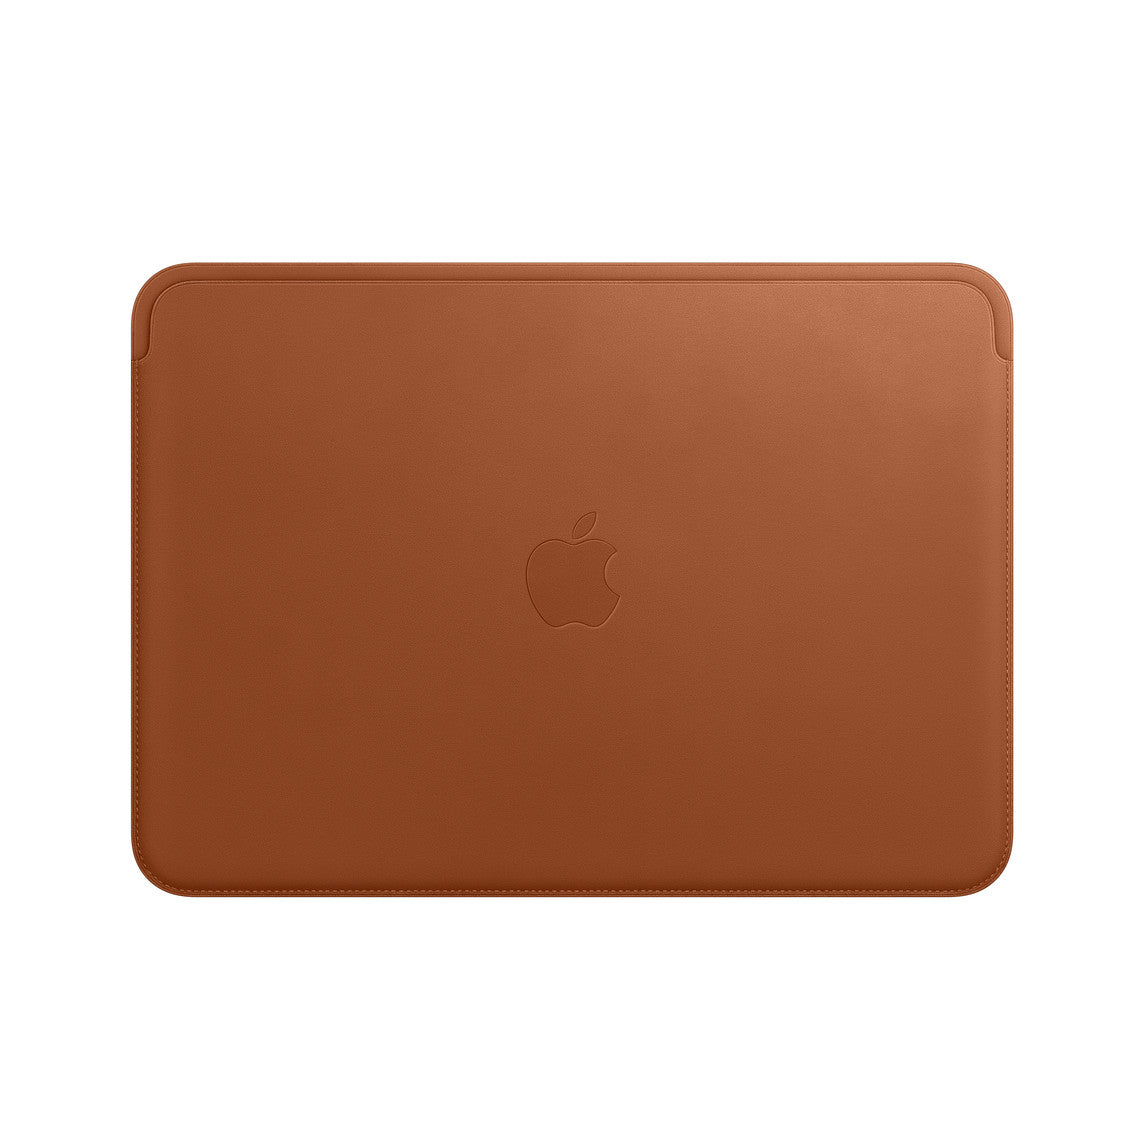 MacBook 13 Leather Sleeve Saddle Brown Saddle Brown New - Sealed